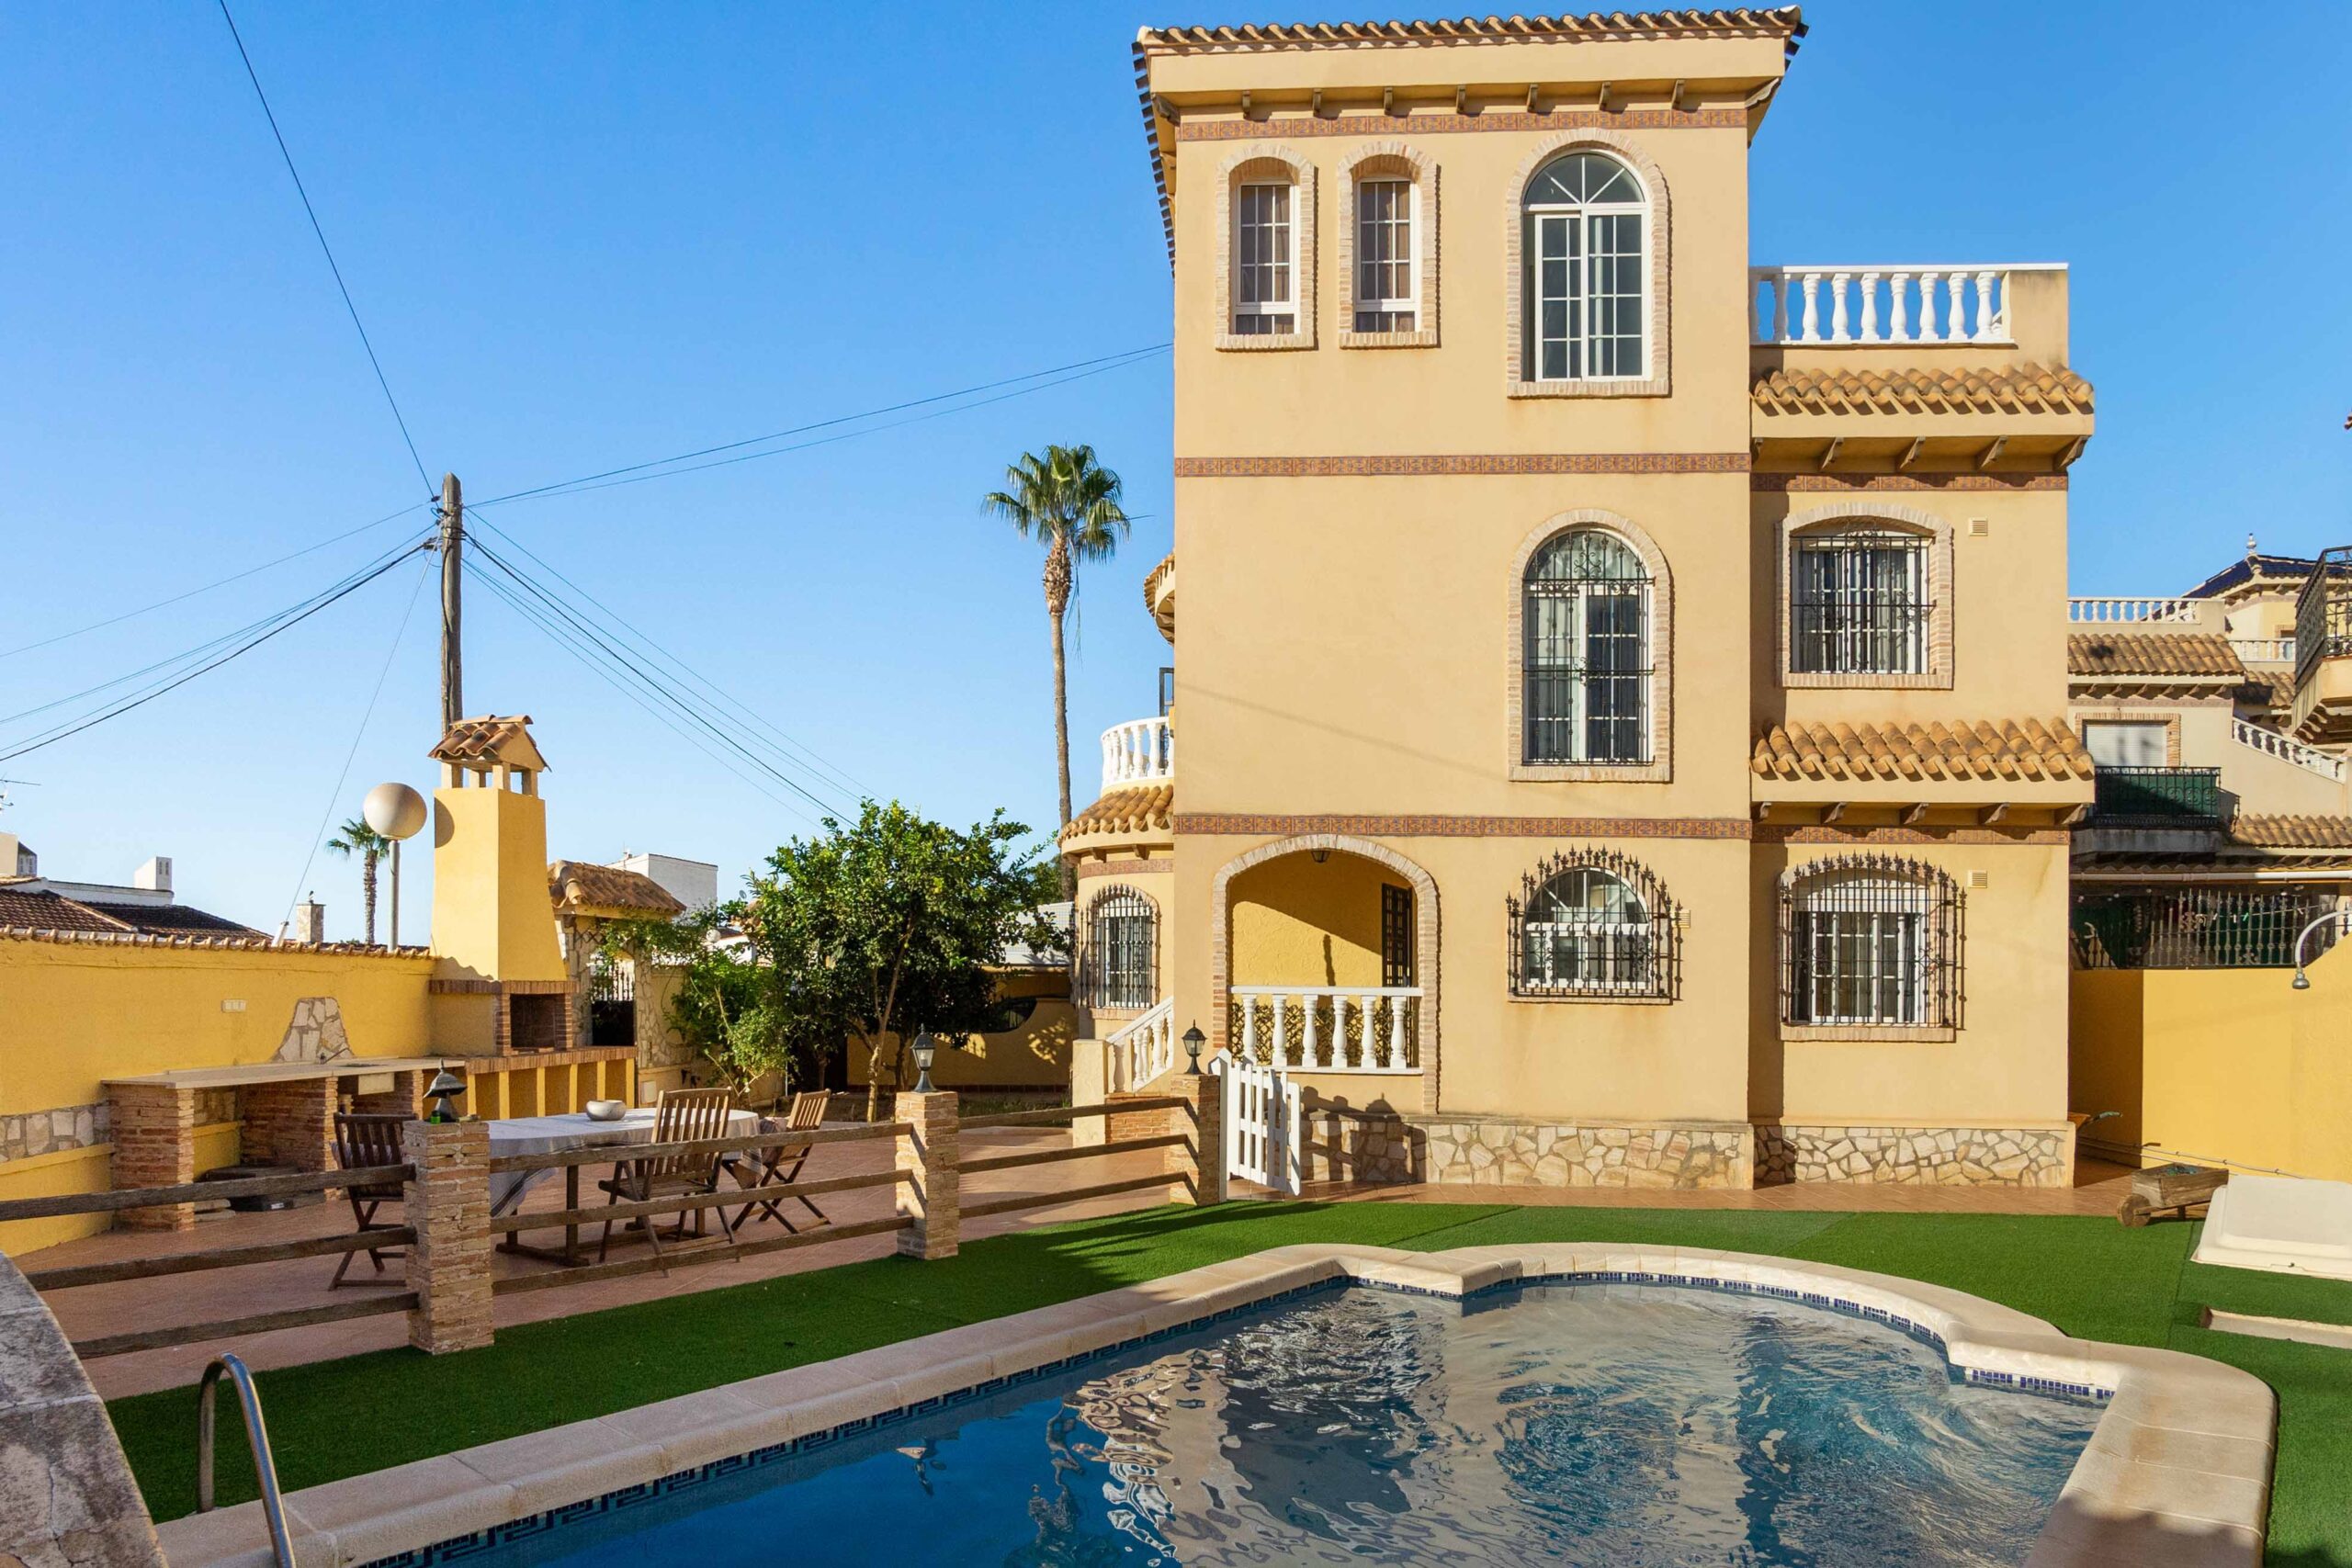 Detached villa for sale with swimming pool in the popular area Las Mimosas near La Zenia Boulevard.